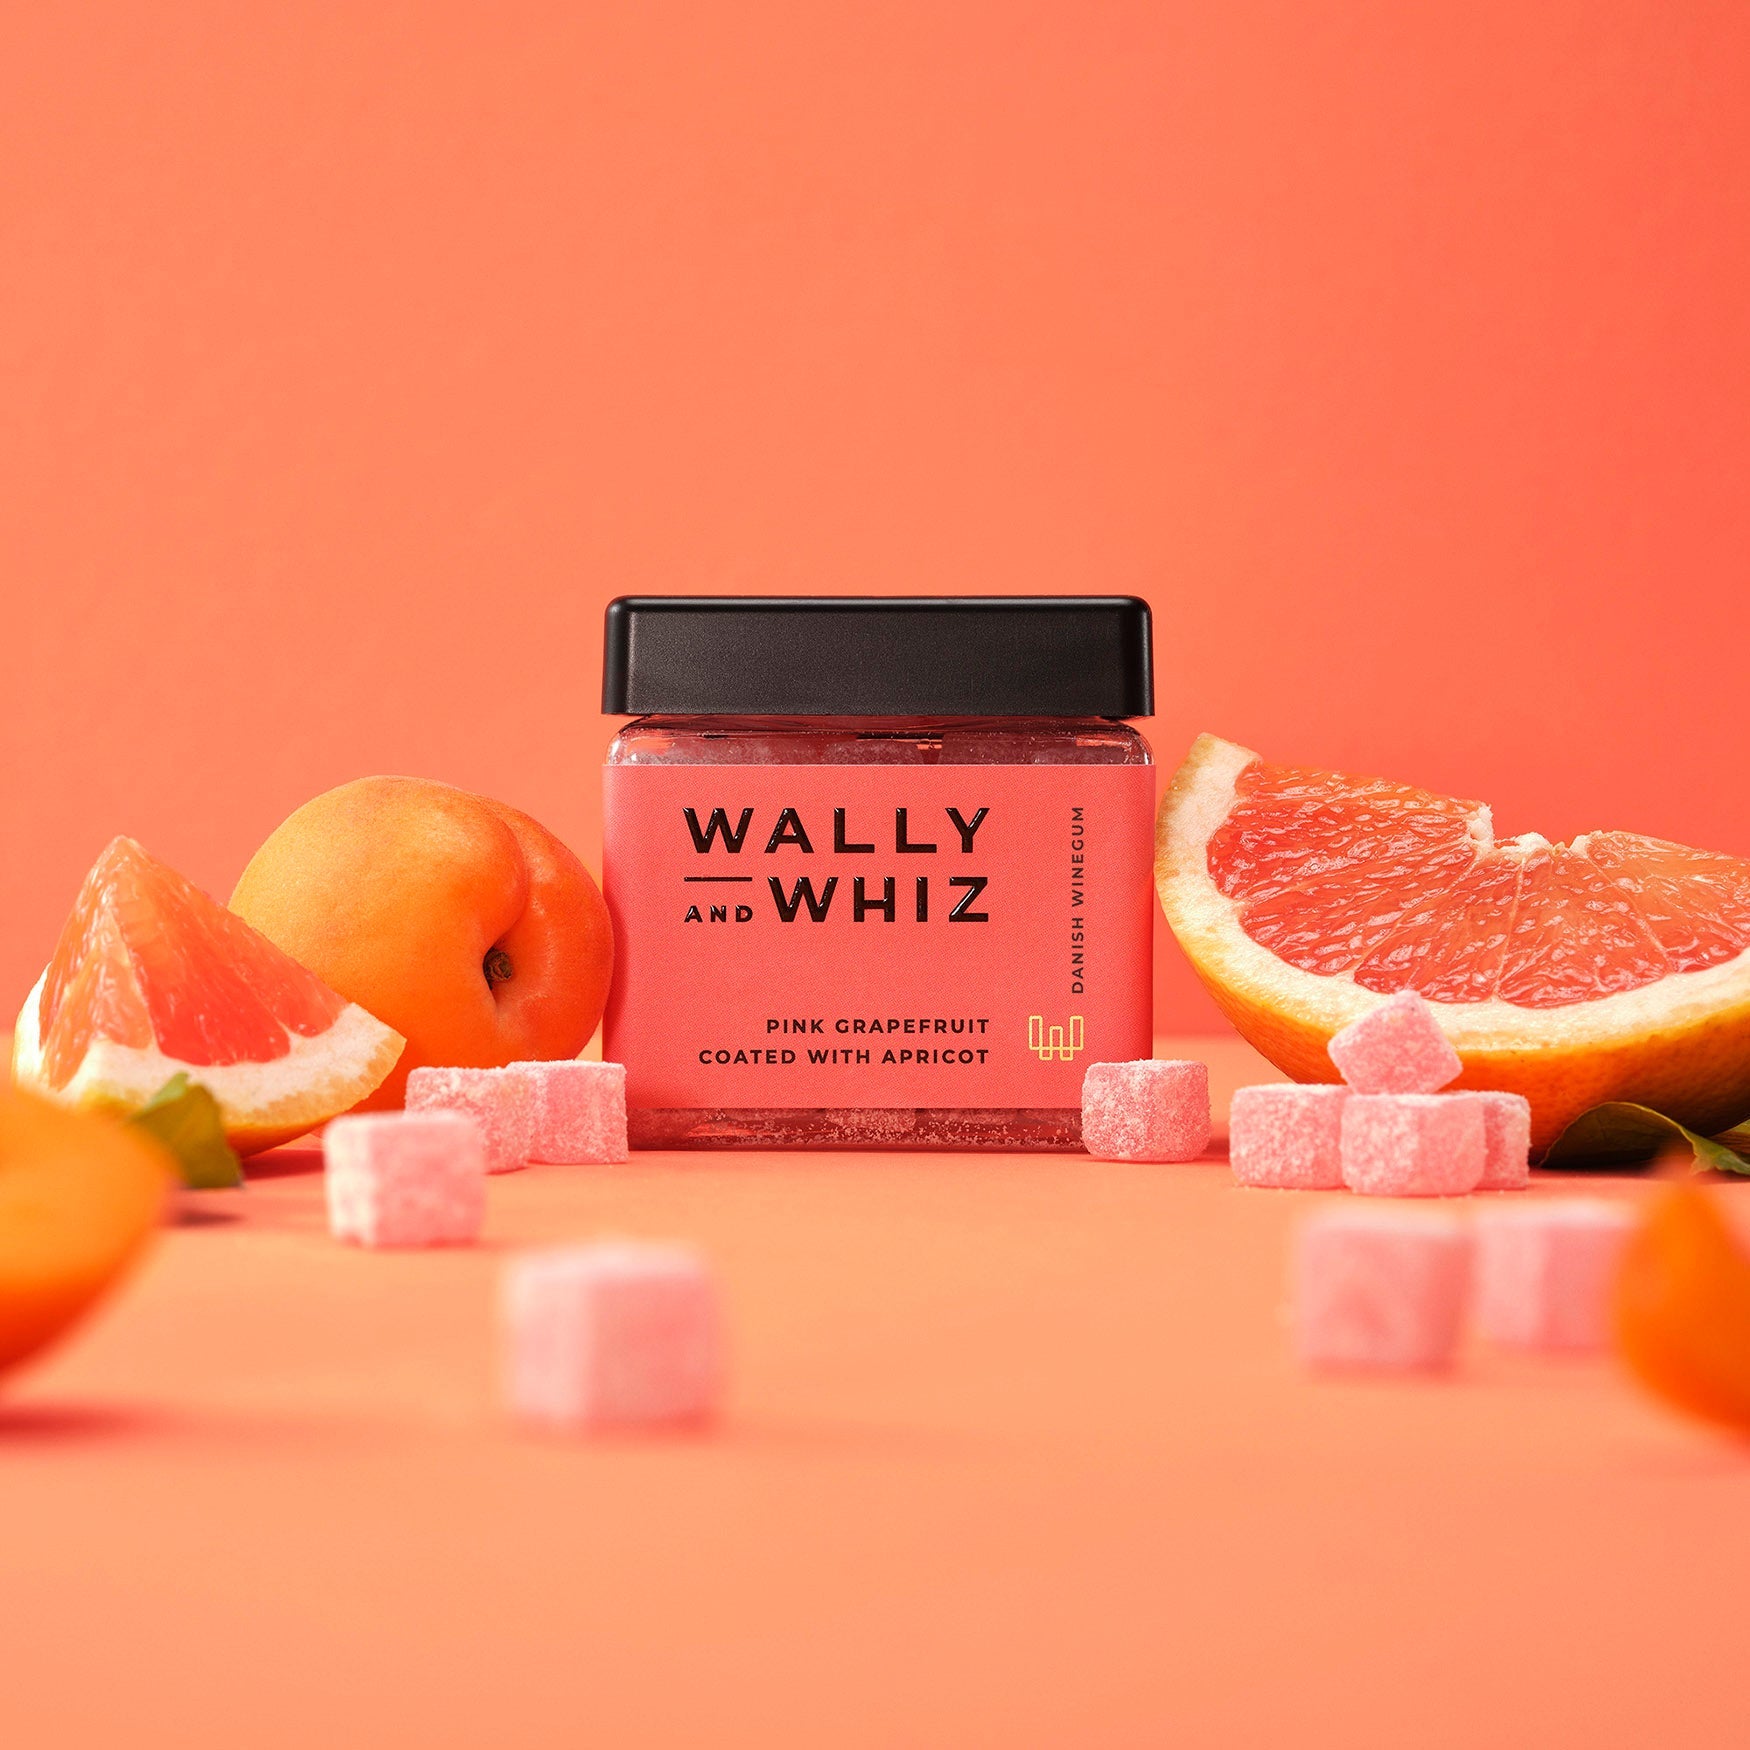 Wally and Whiz Vinkummi kub rosa grapefrukt med aprikos, 140 g